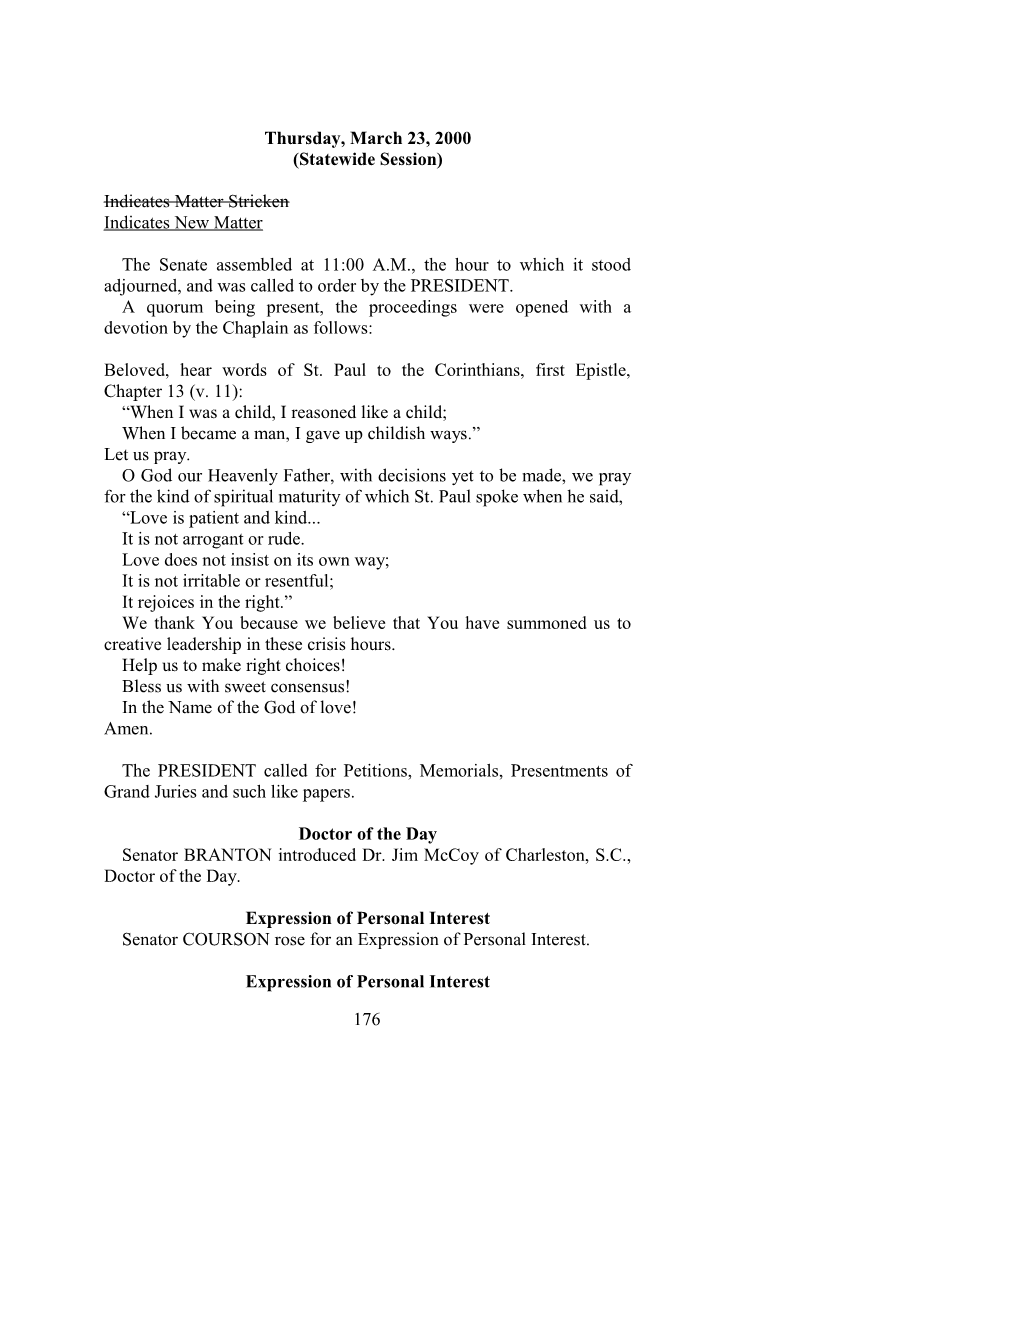 Senate Journal for Mar. 23, 2000 - South Carolina Legislature Online